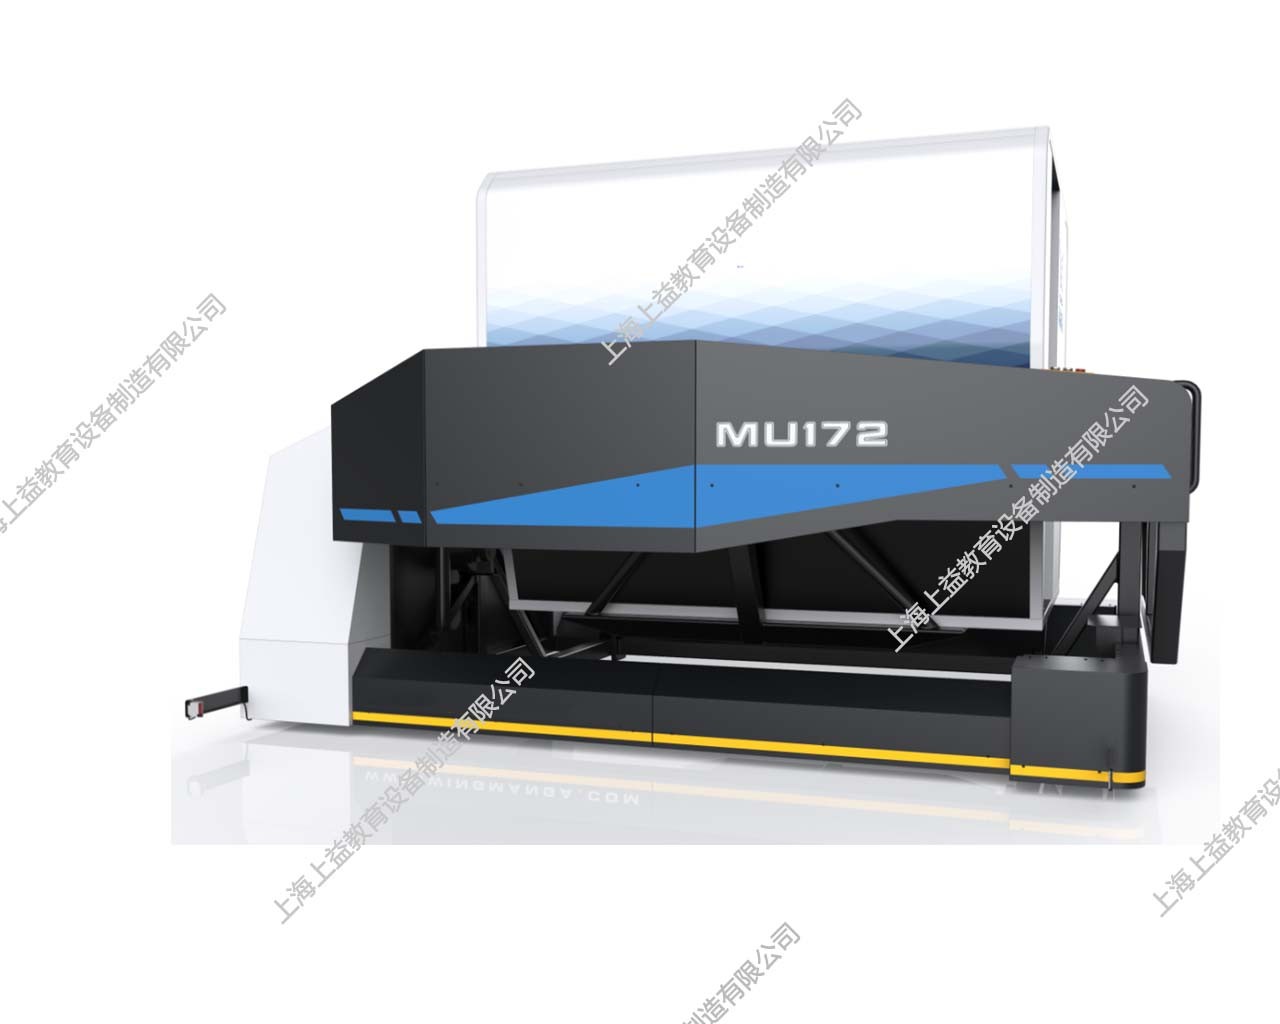 MU172白鷺系列全動模擬器